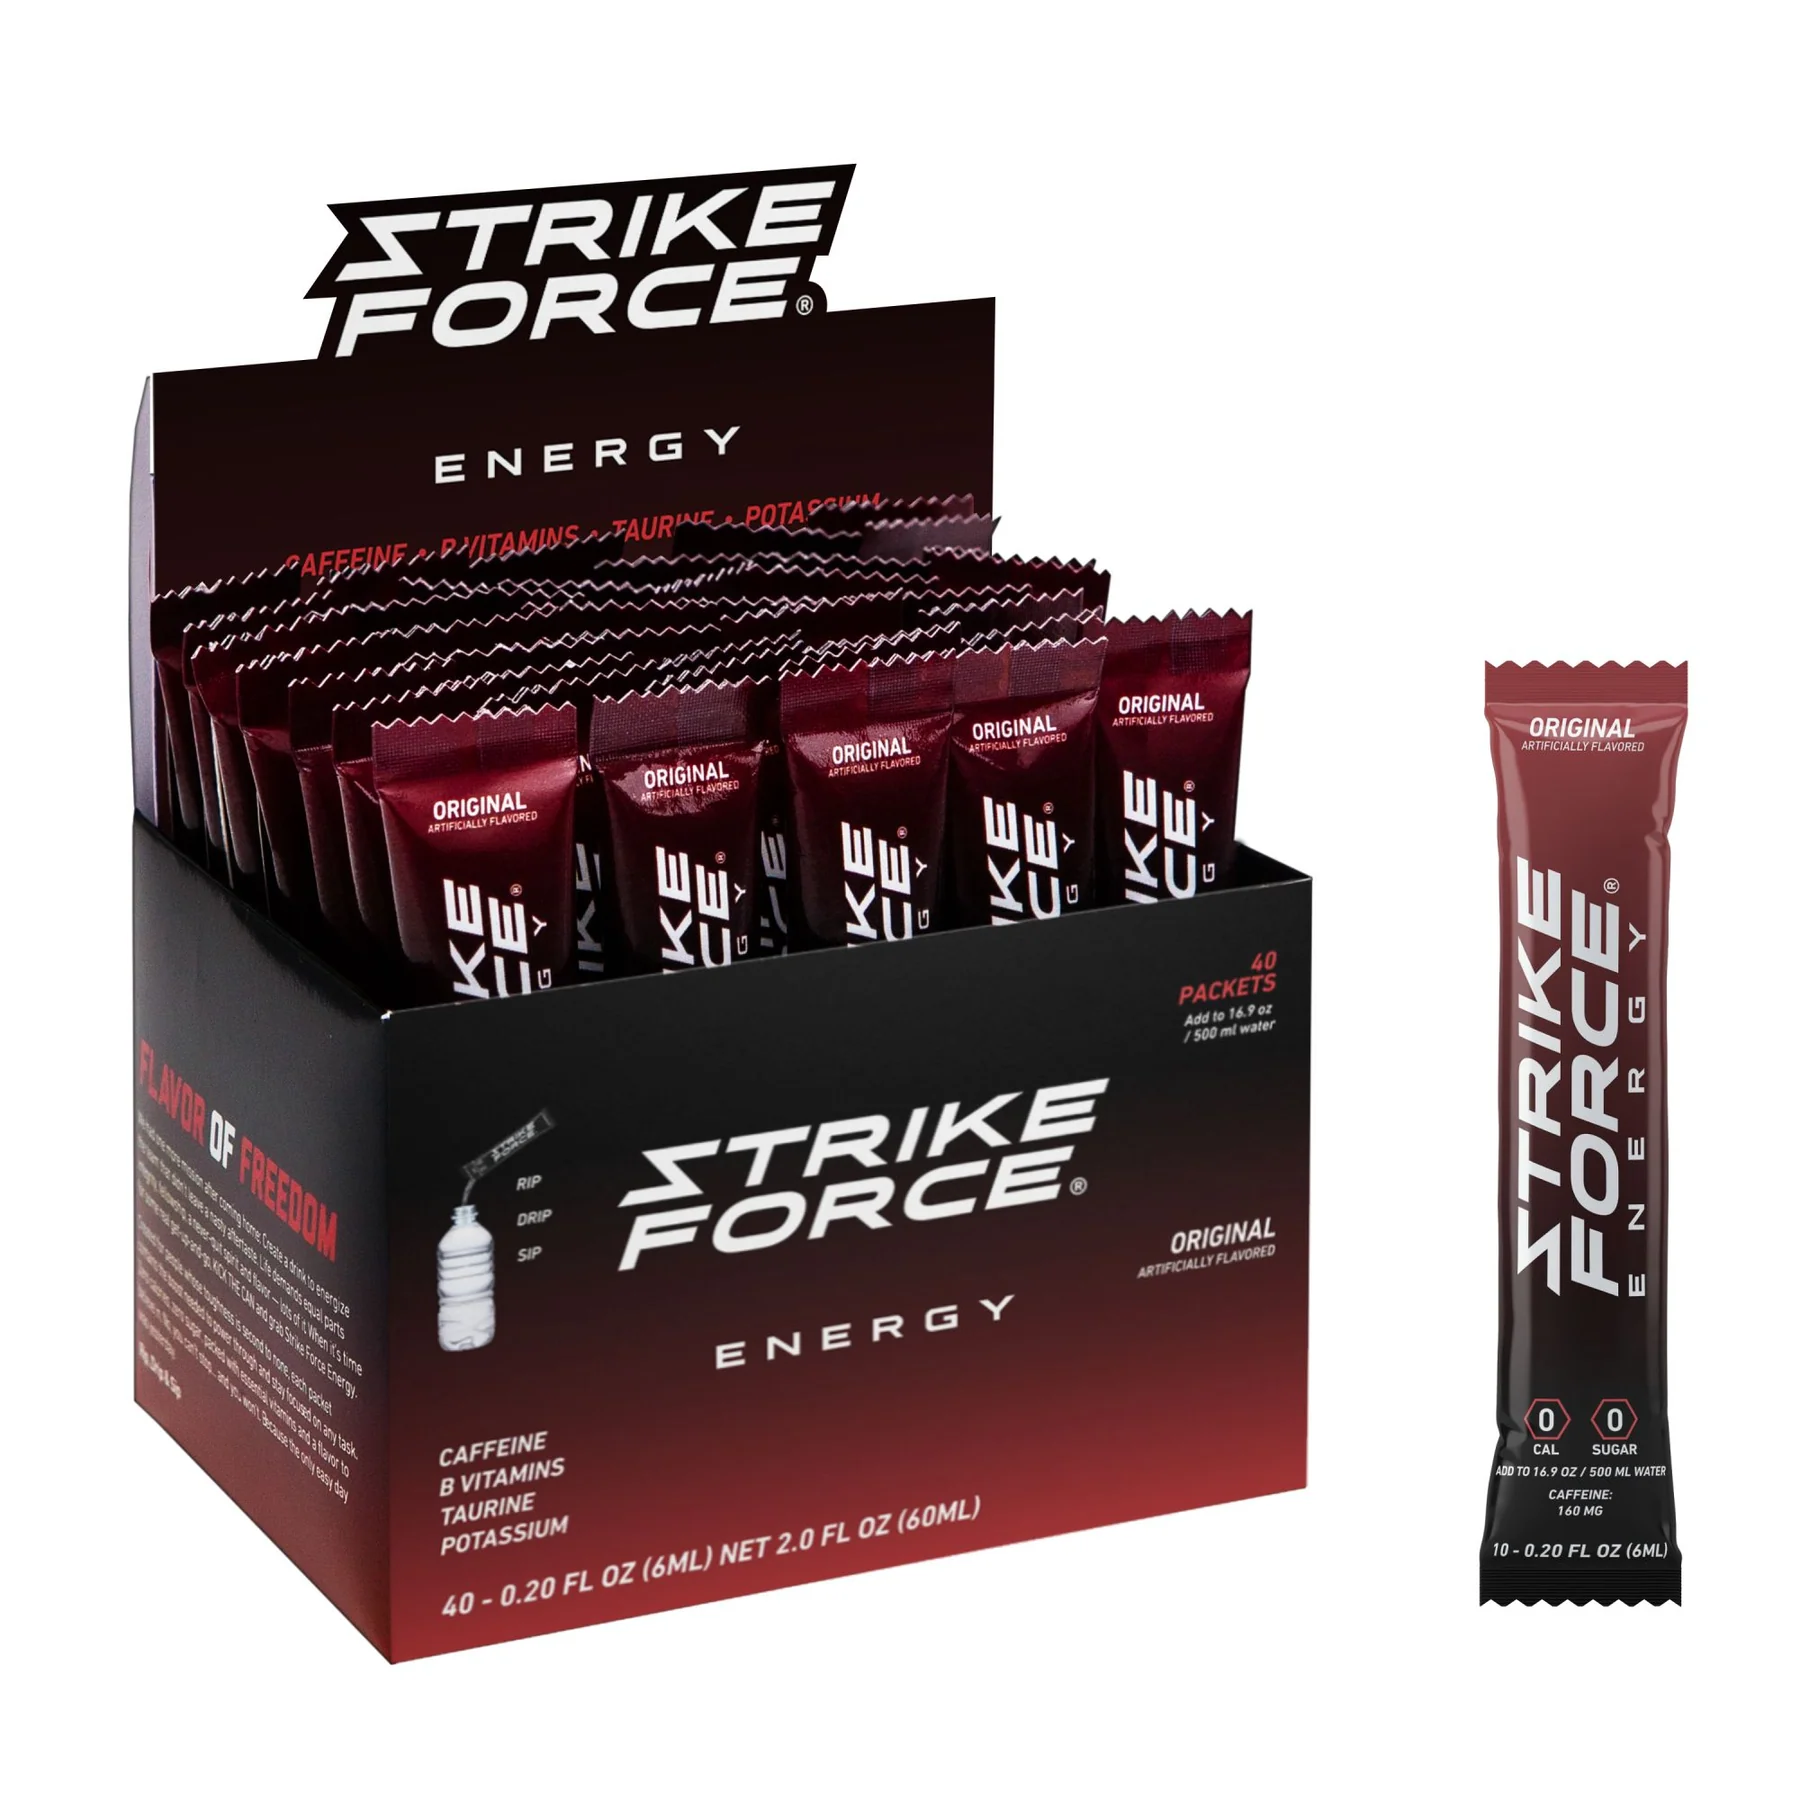 Strike Force Energy 40 count box, Original